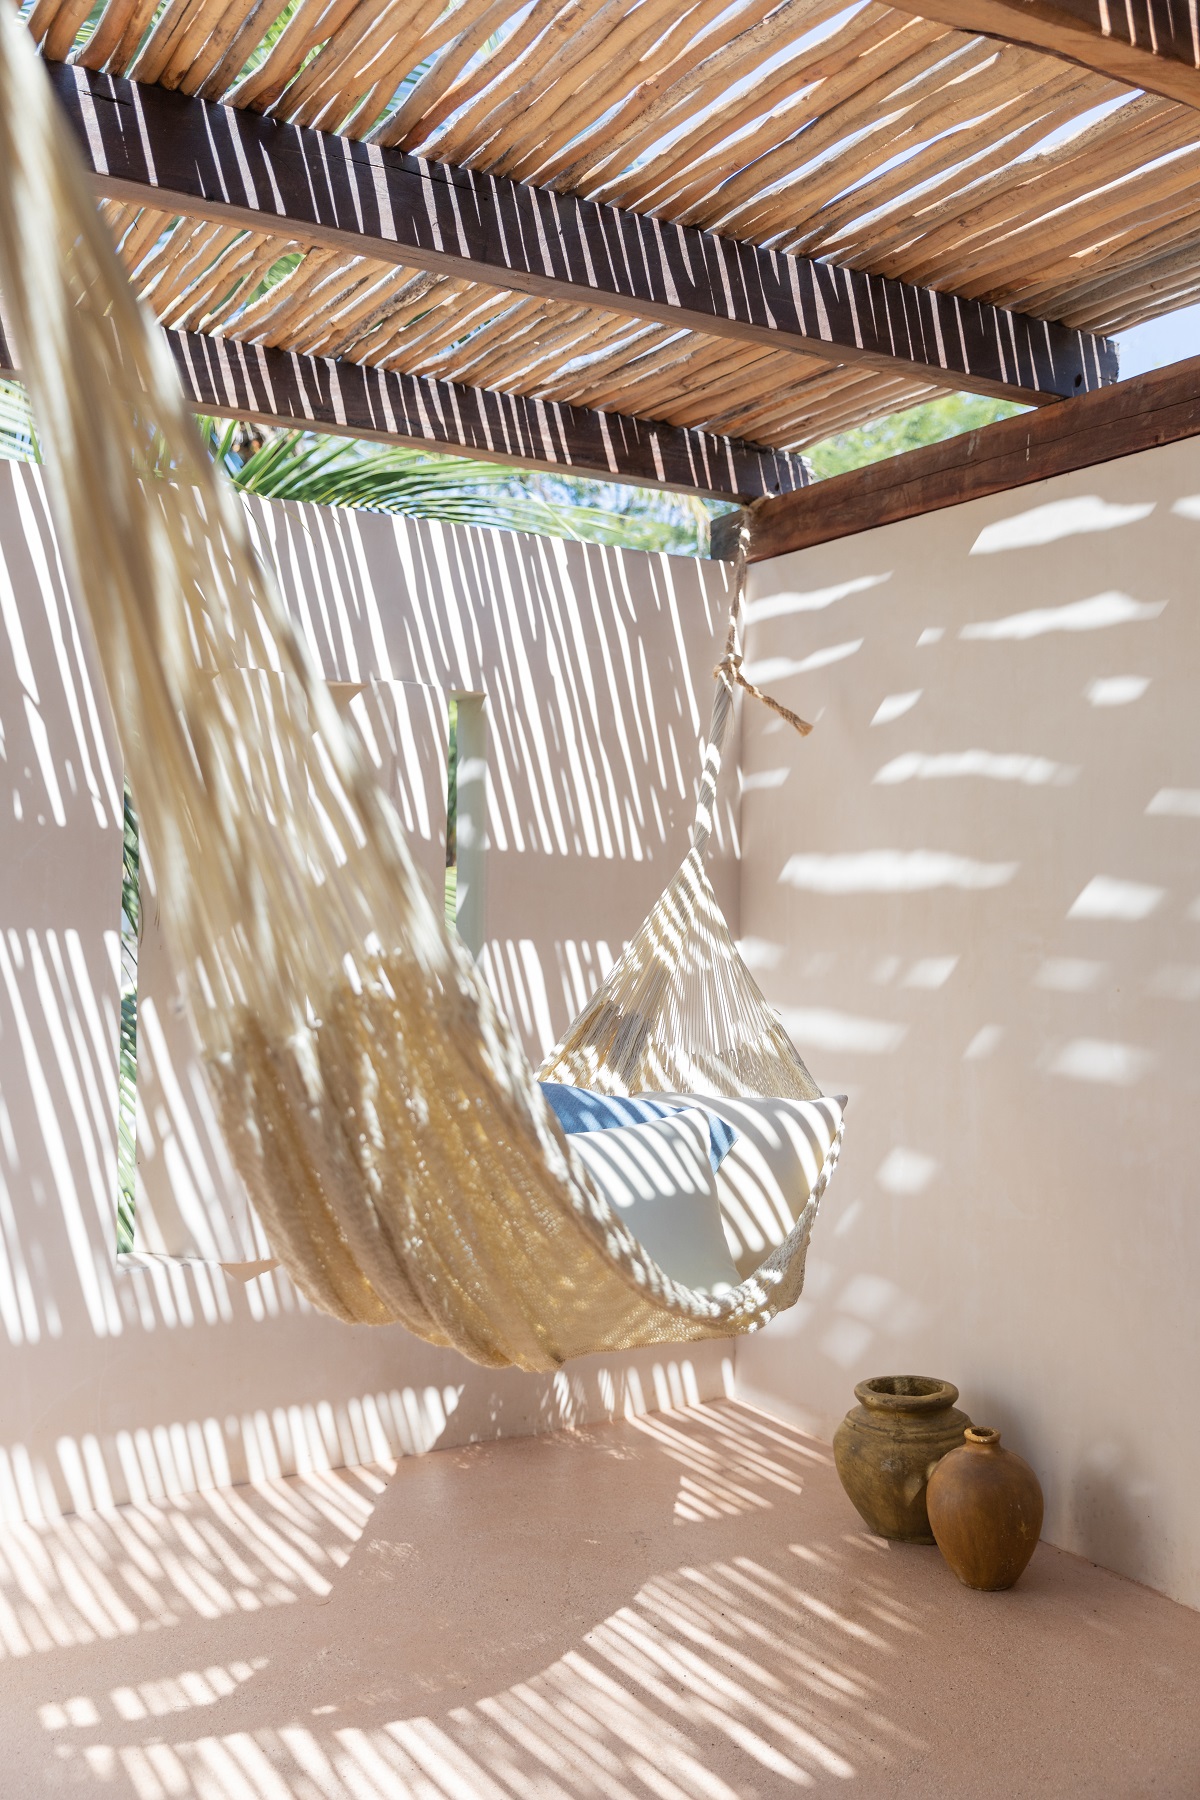 Hammock under bamboo roof with dappled light